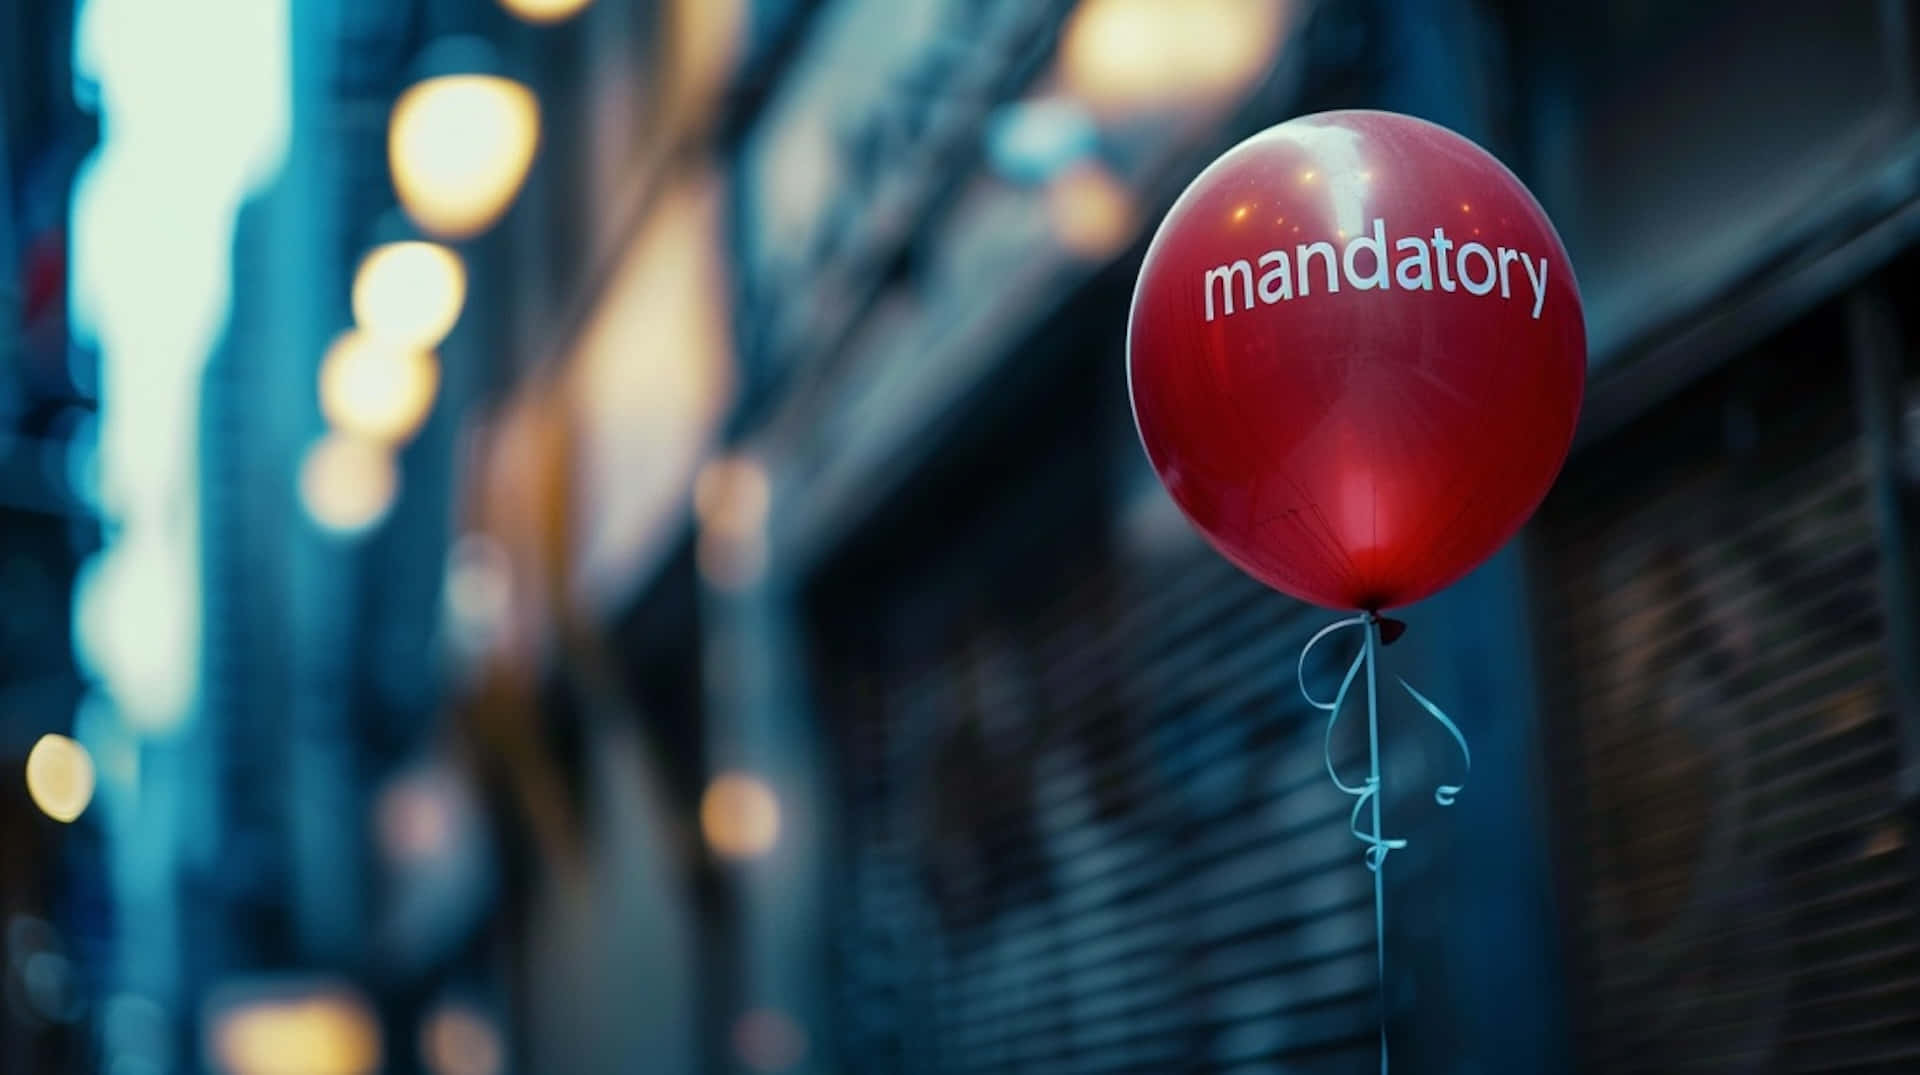 Mandatory Red Balloon Urban Backdrop Wallpaper